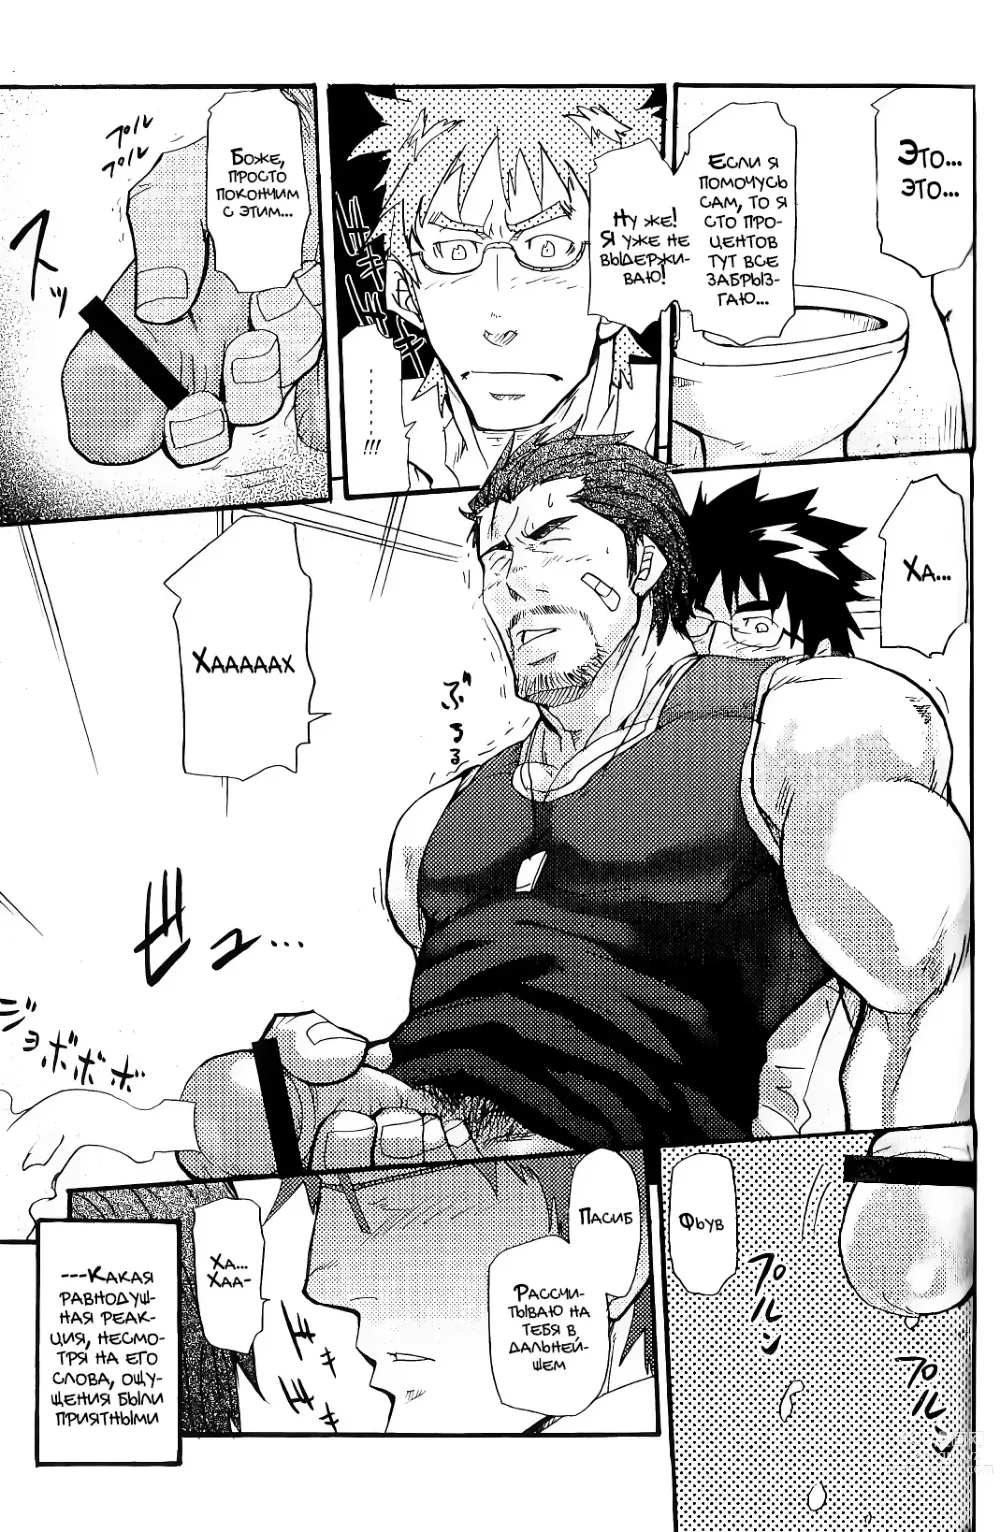 Page 11 of manga 10 дней жизни в одном хаори!!